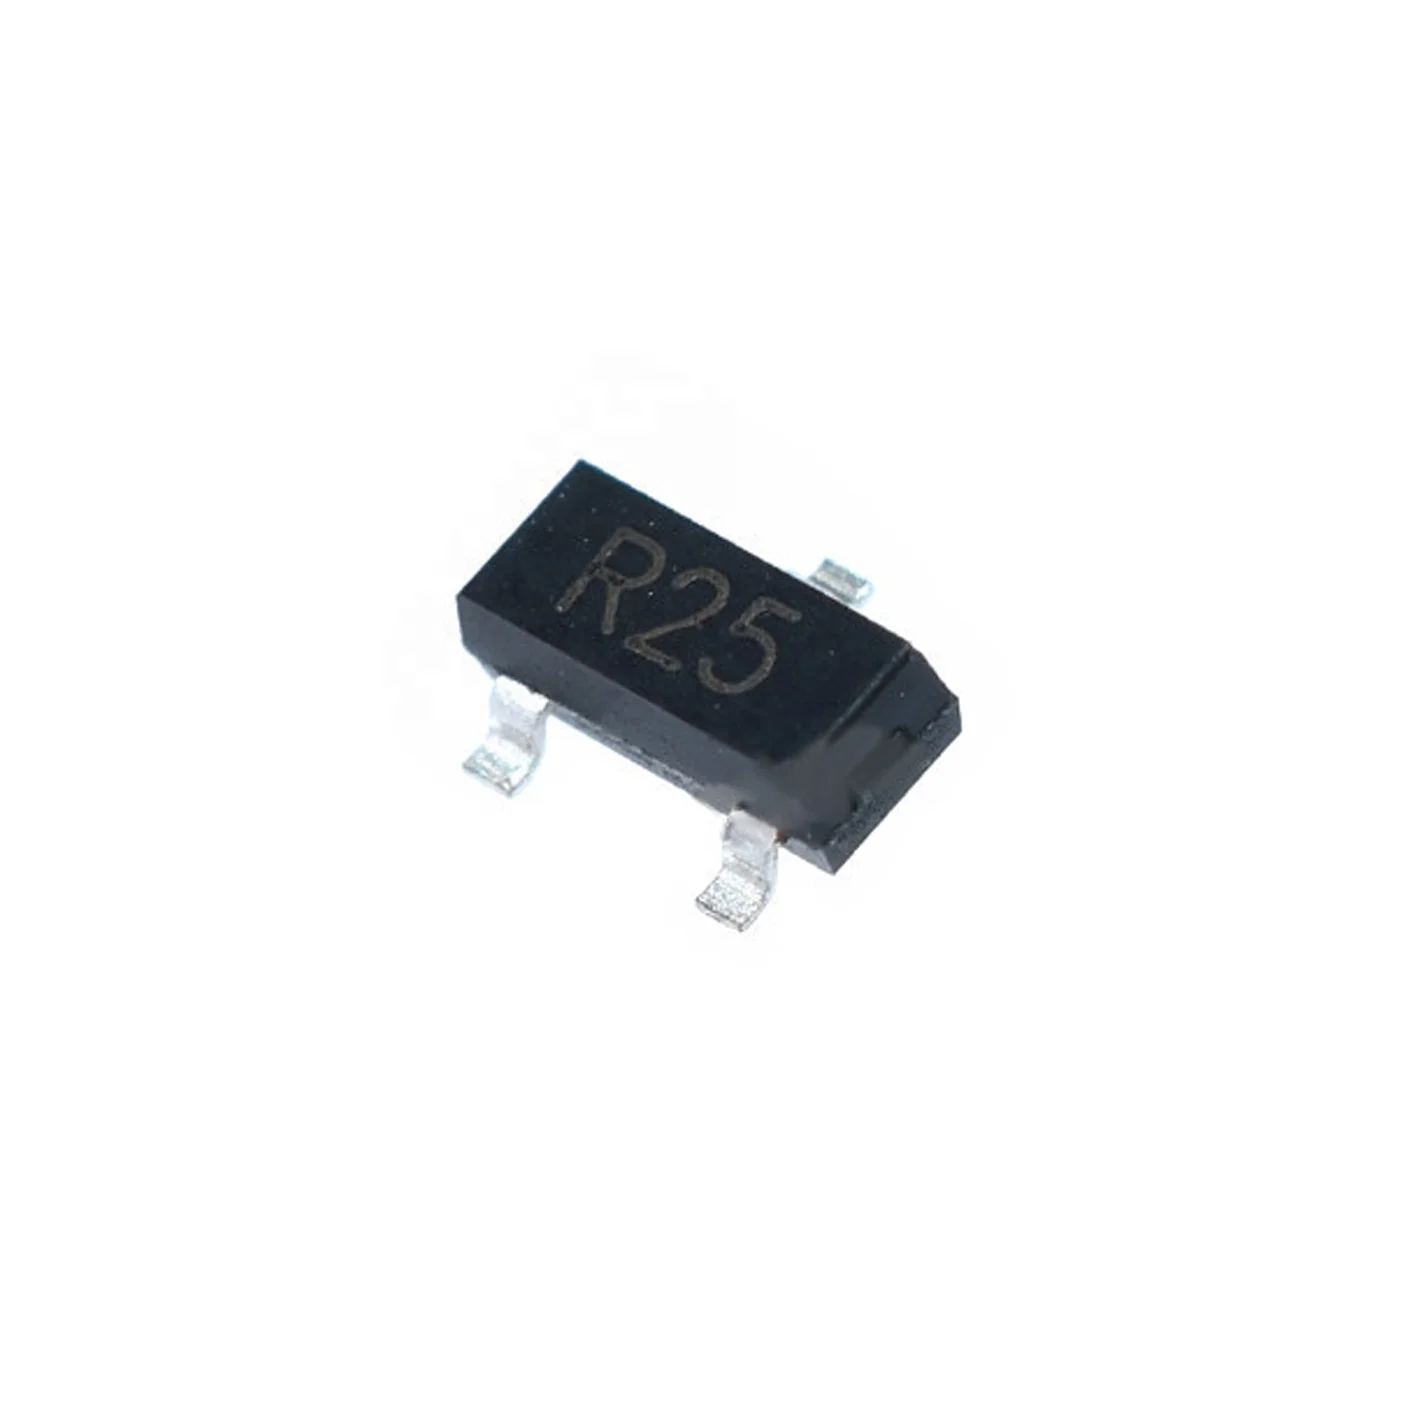 2pcs 'Stocks UK ' 2SC3356 SMD Nec Transistor C3356 Marquage 'R25' Lot de 2